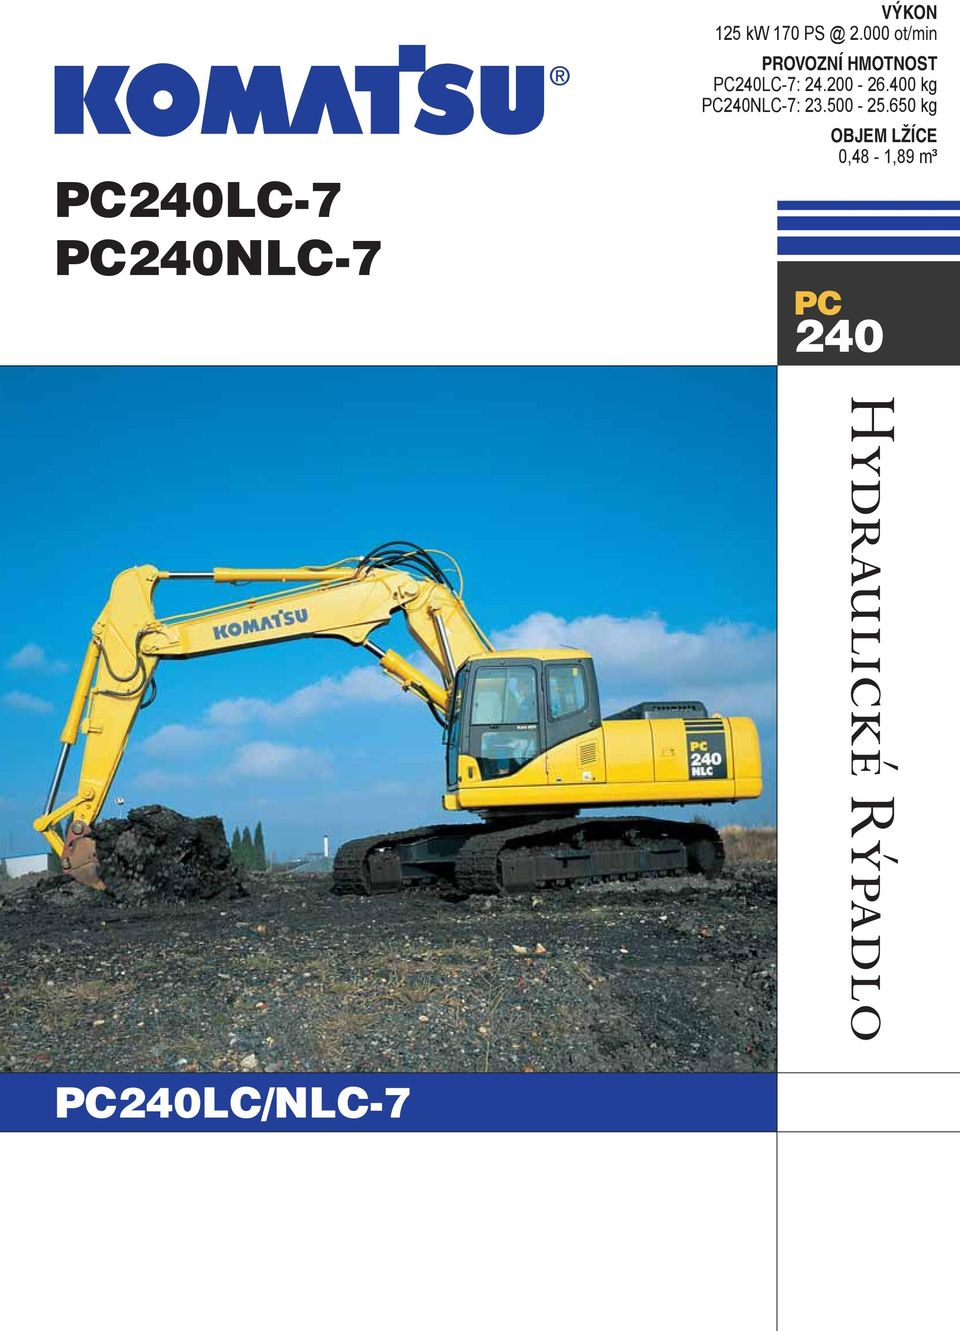 200-26.400 kg PC240NLC-7: 23.500-25.